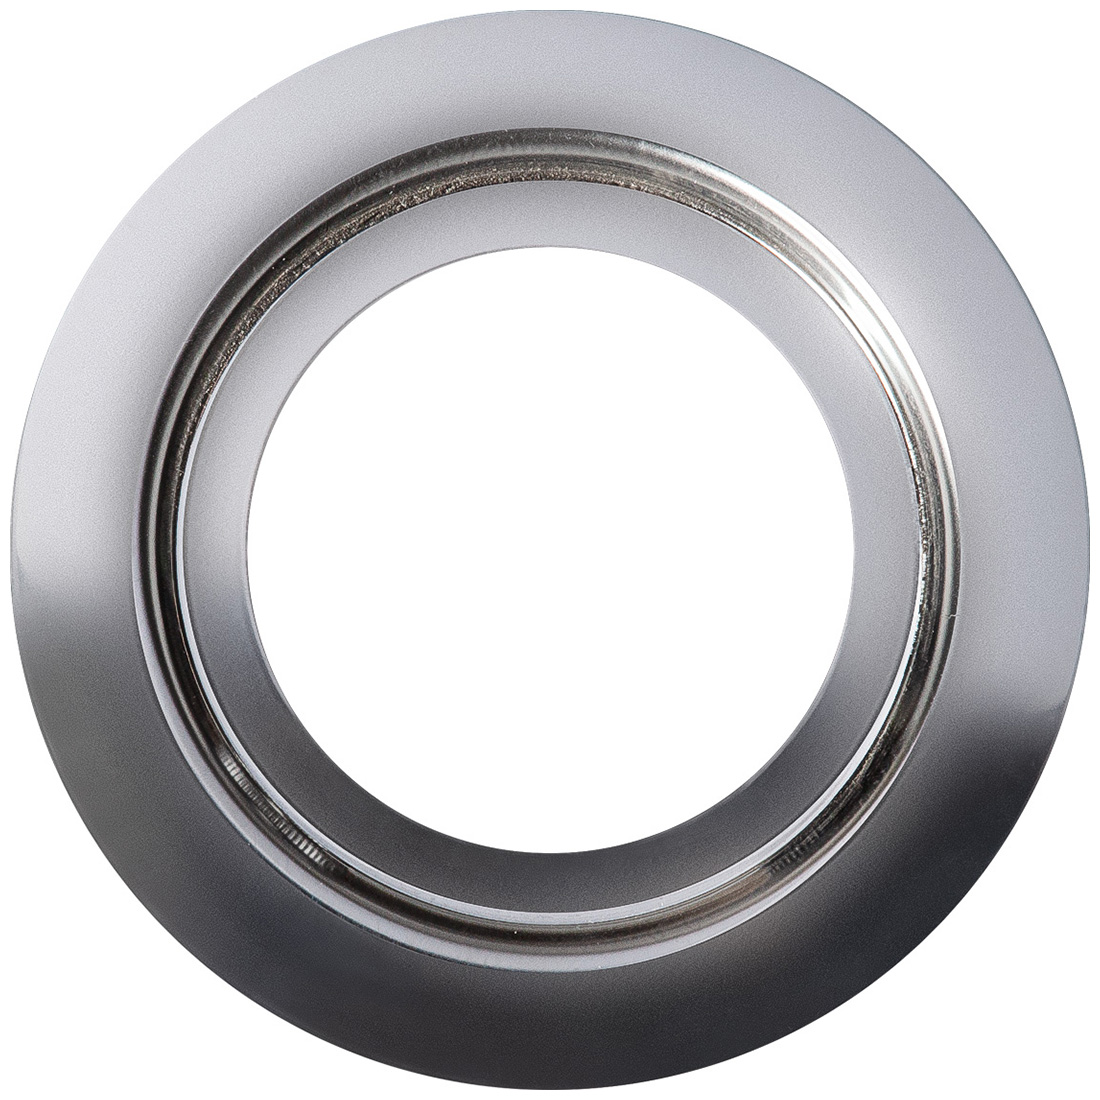 Кольцо переходник для измельчителя Bort Ring 140, 93412635 набор для монтажа моек ukinox 100x100x20 мм сталь